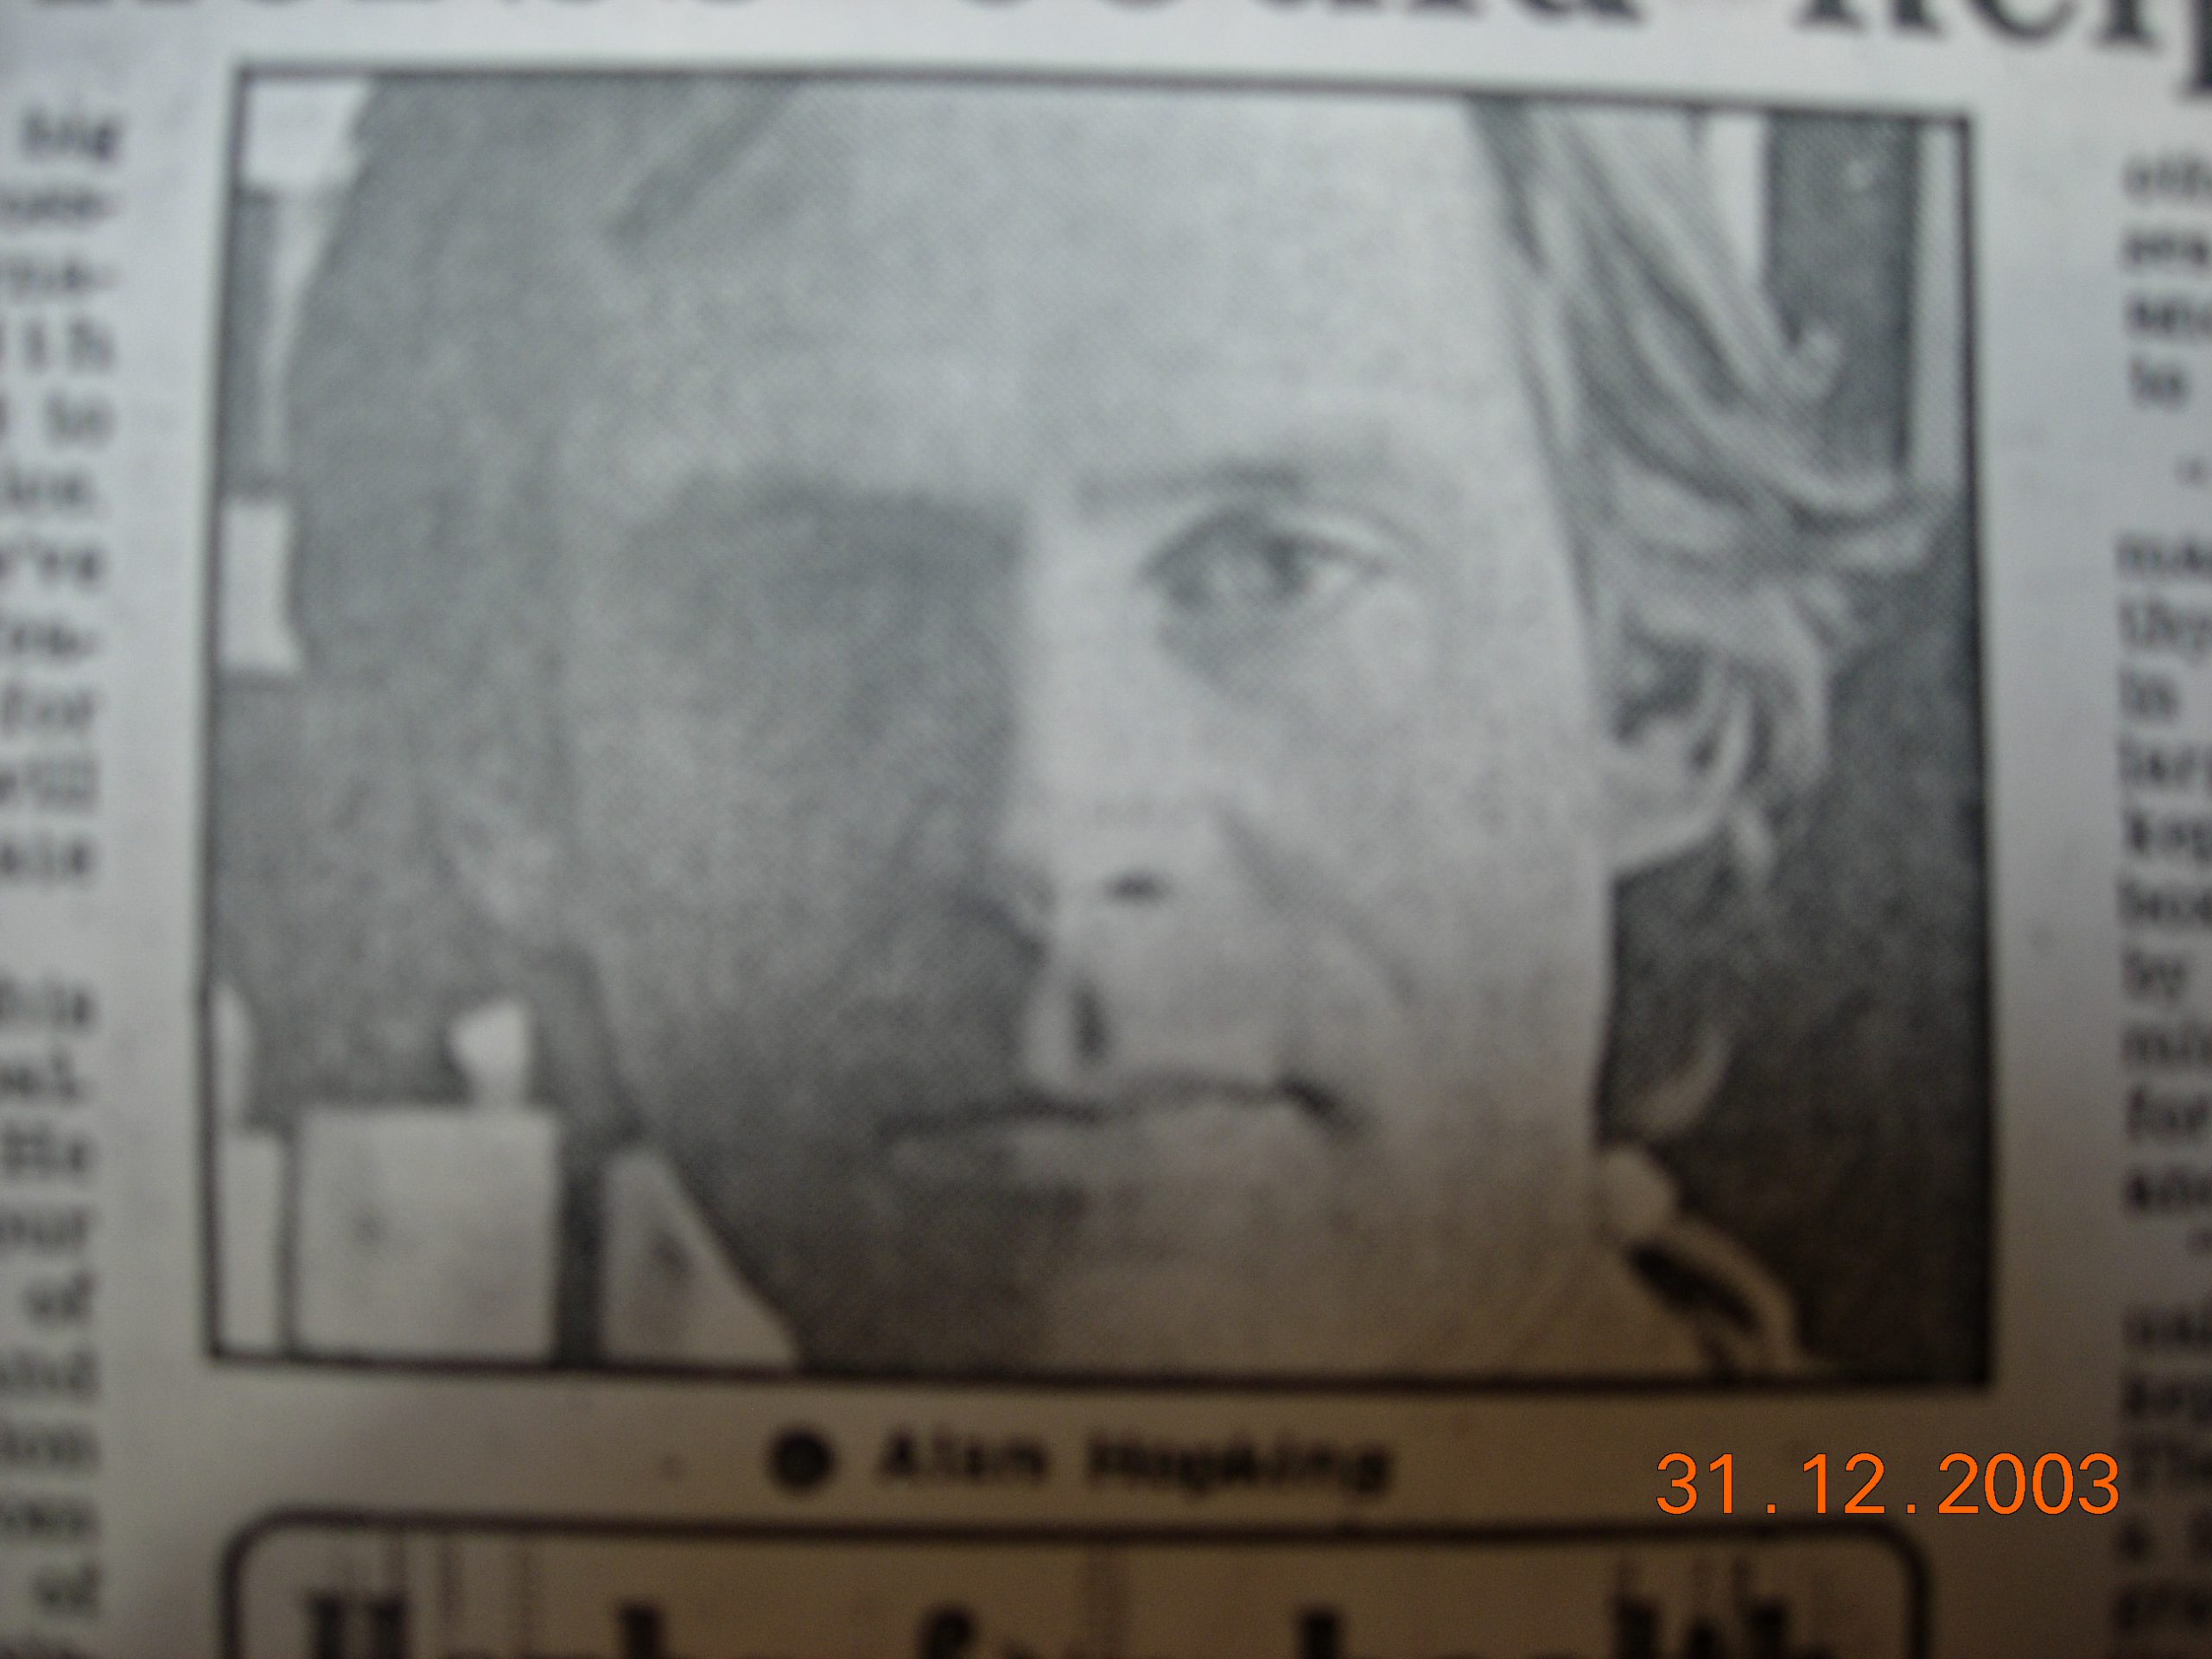 alan in the newspaper 1983